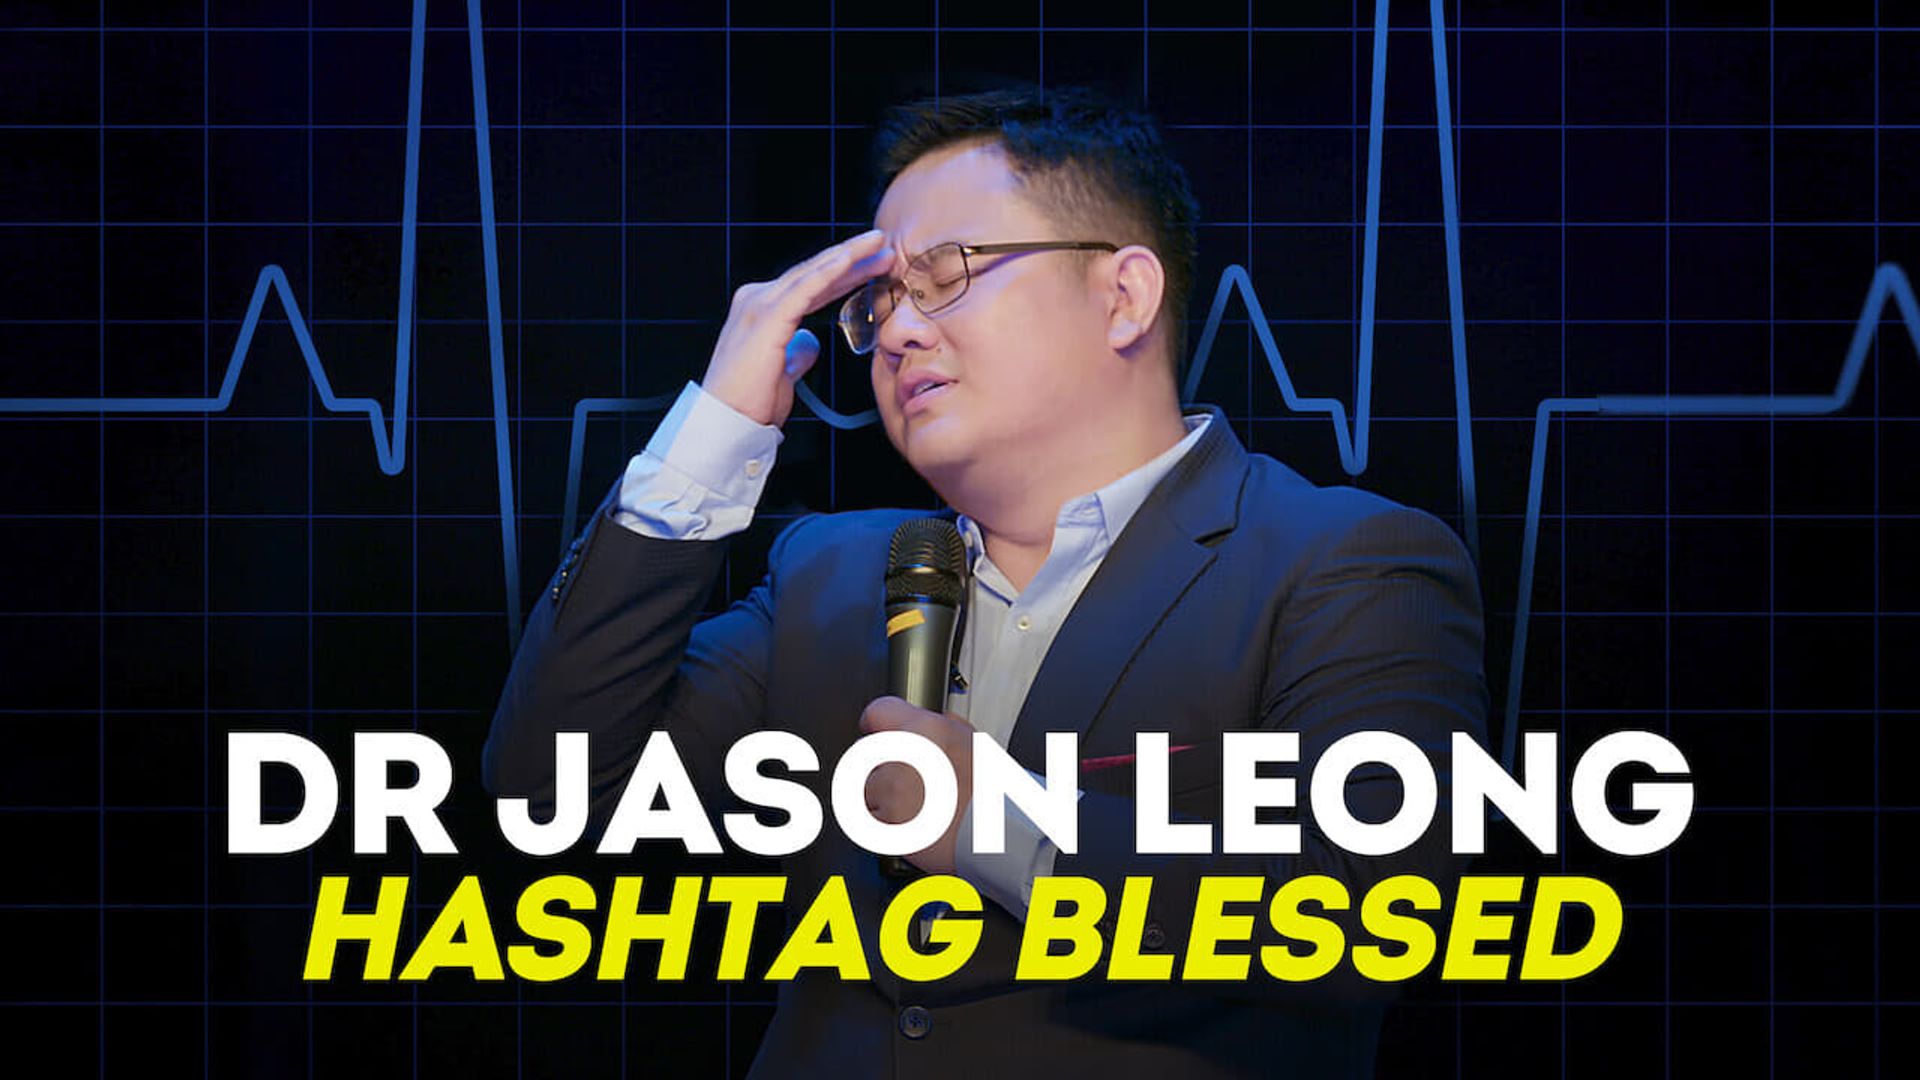 Dr Jason Leong: Hashtag Blessed background